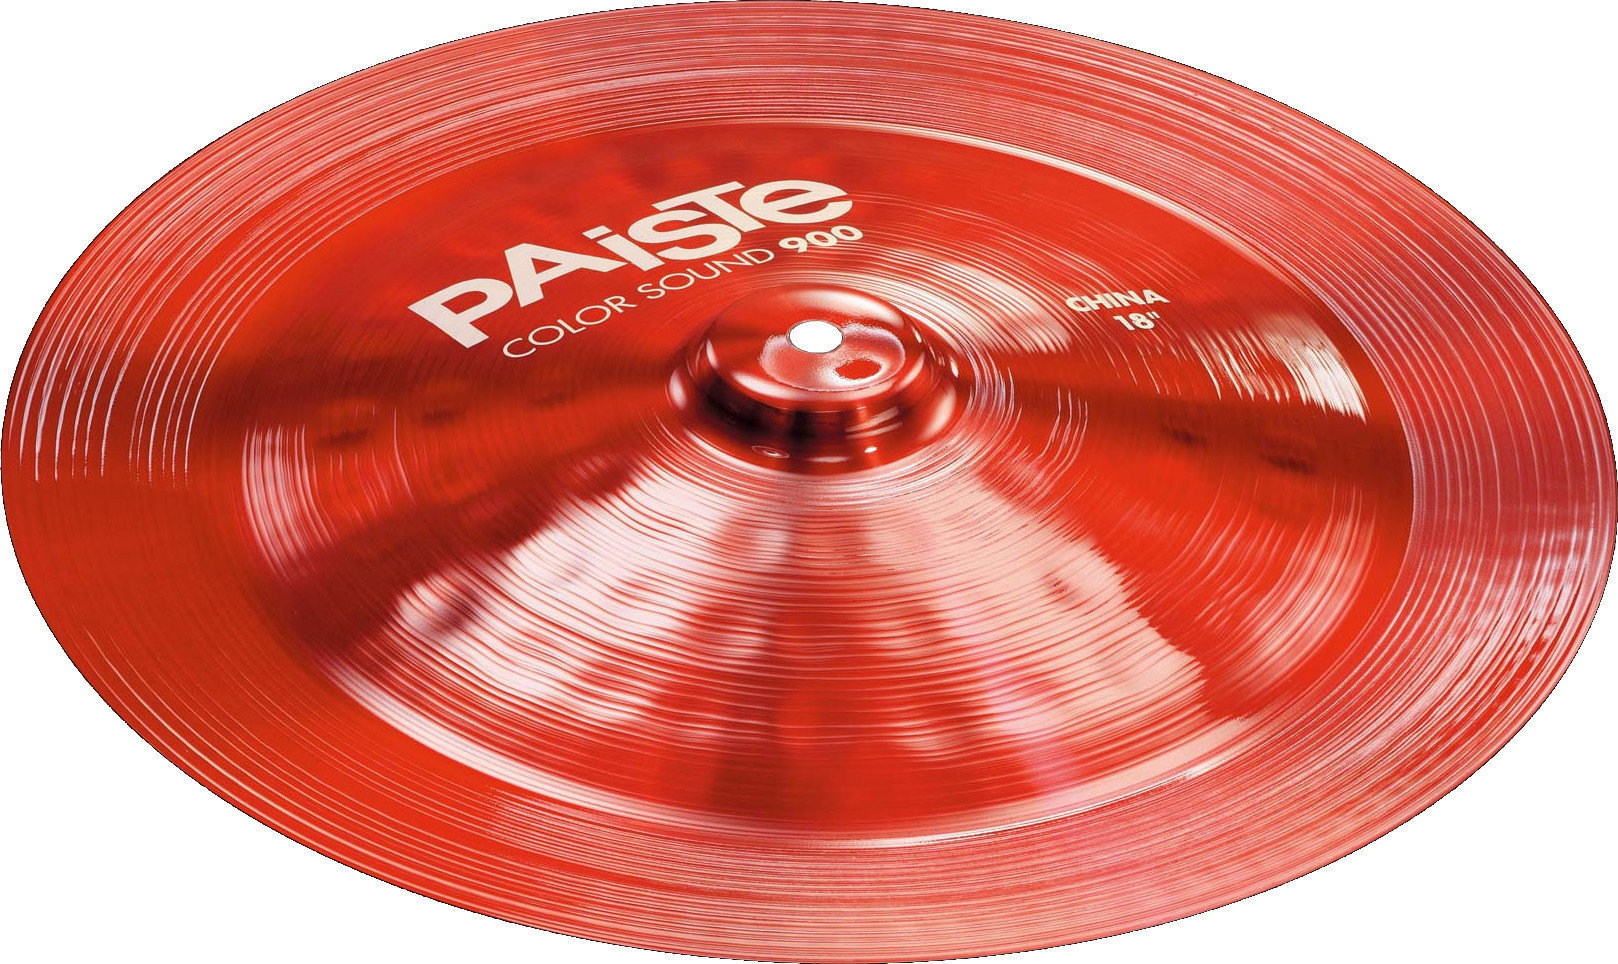 Cymbale china Paiste Color Sound 900 Cymbale china 18" Rouge